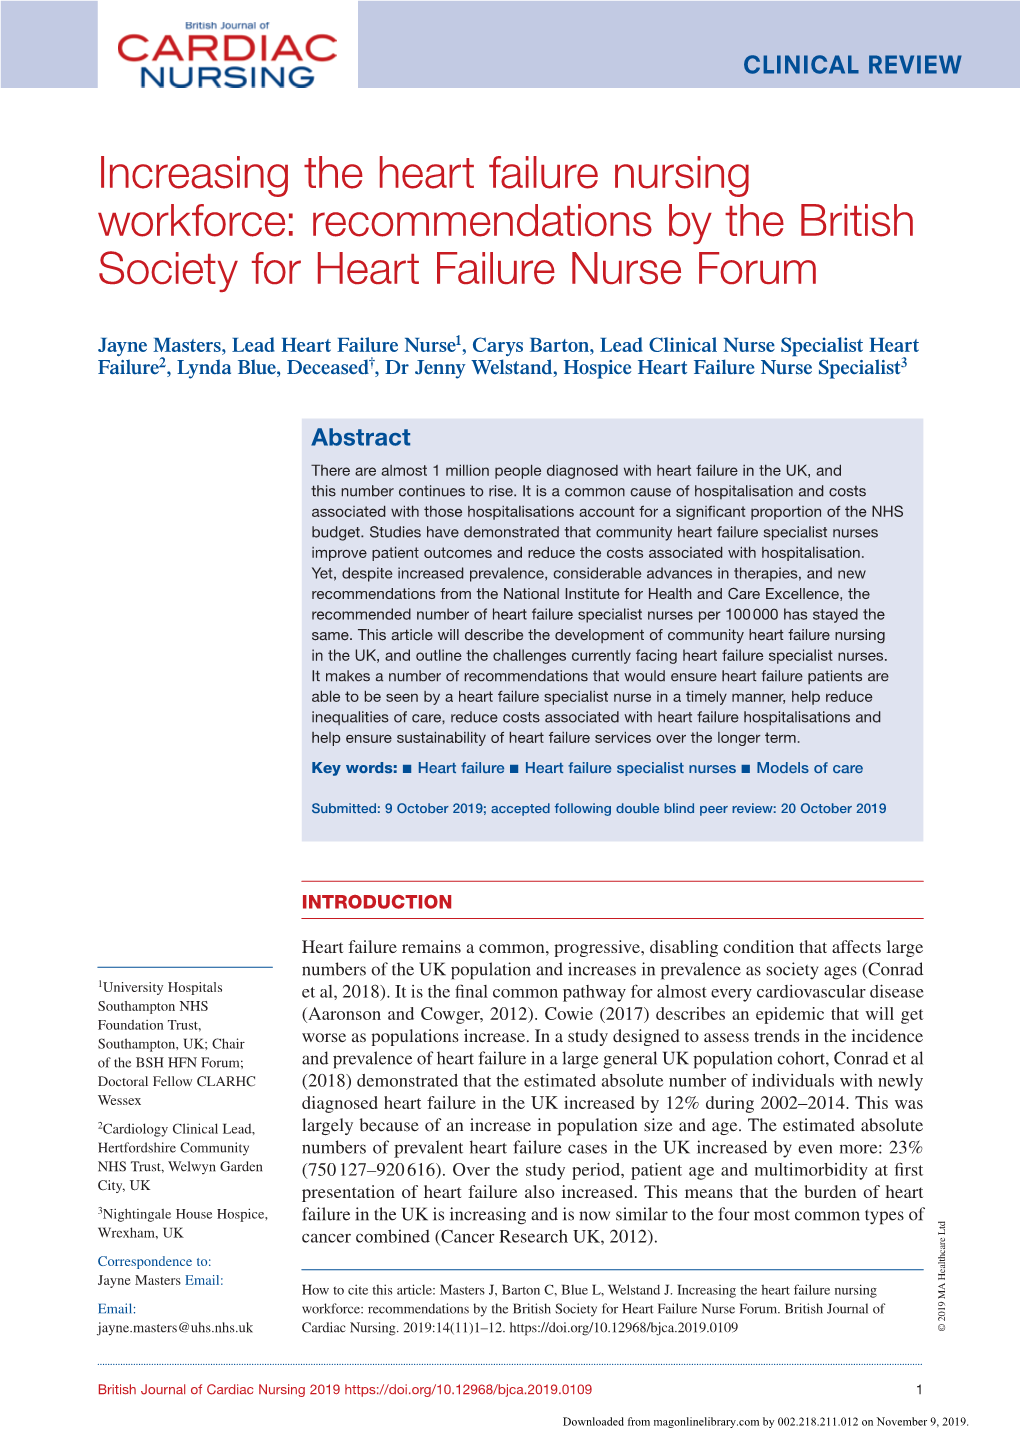 Increasing the Heart Failure Nursing Workforce